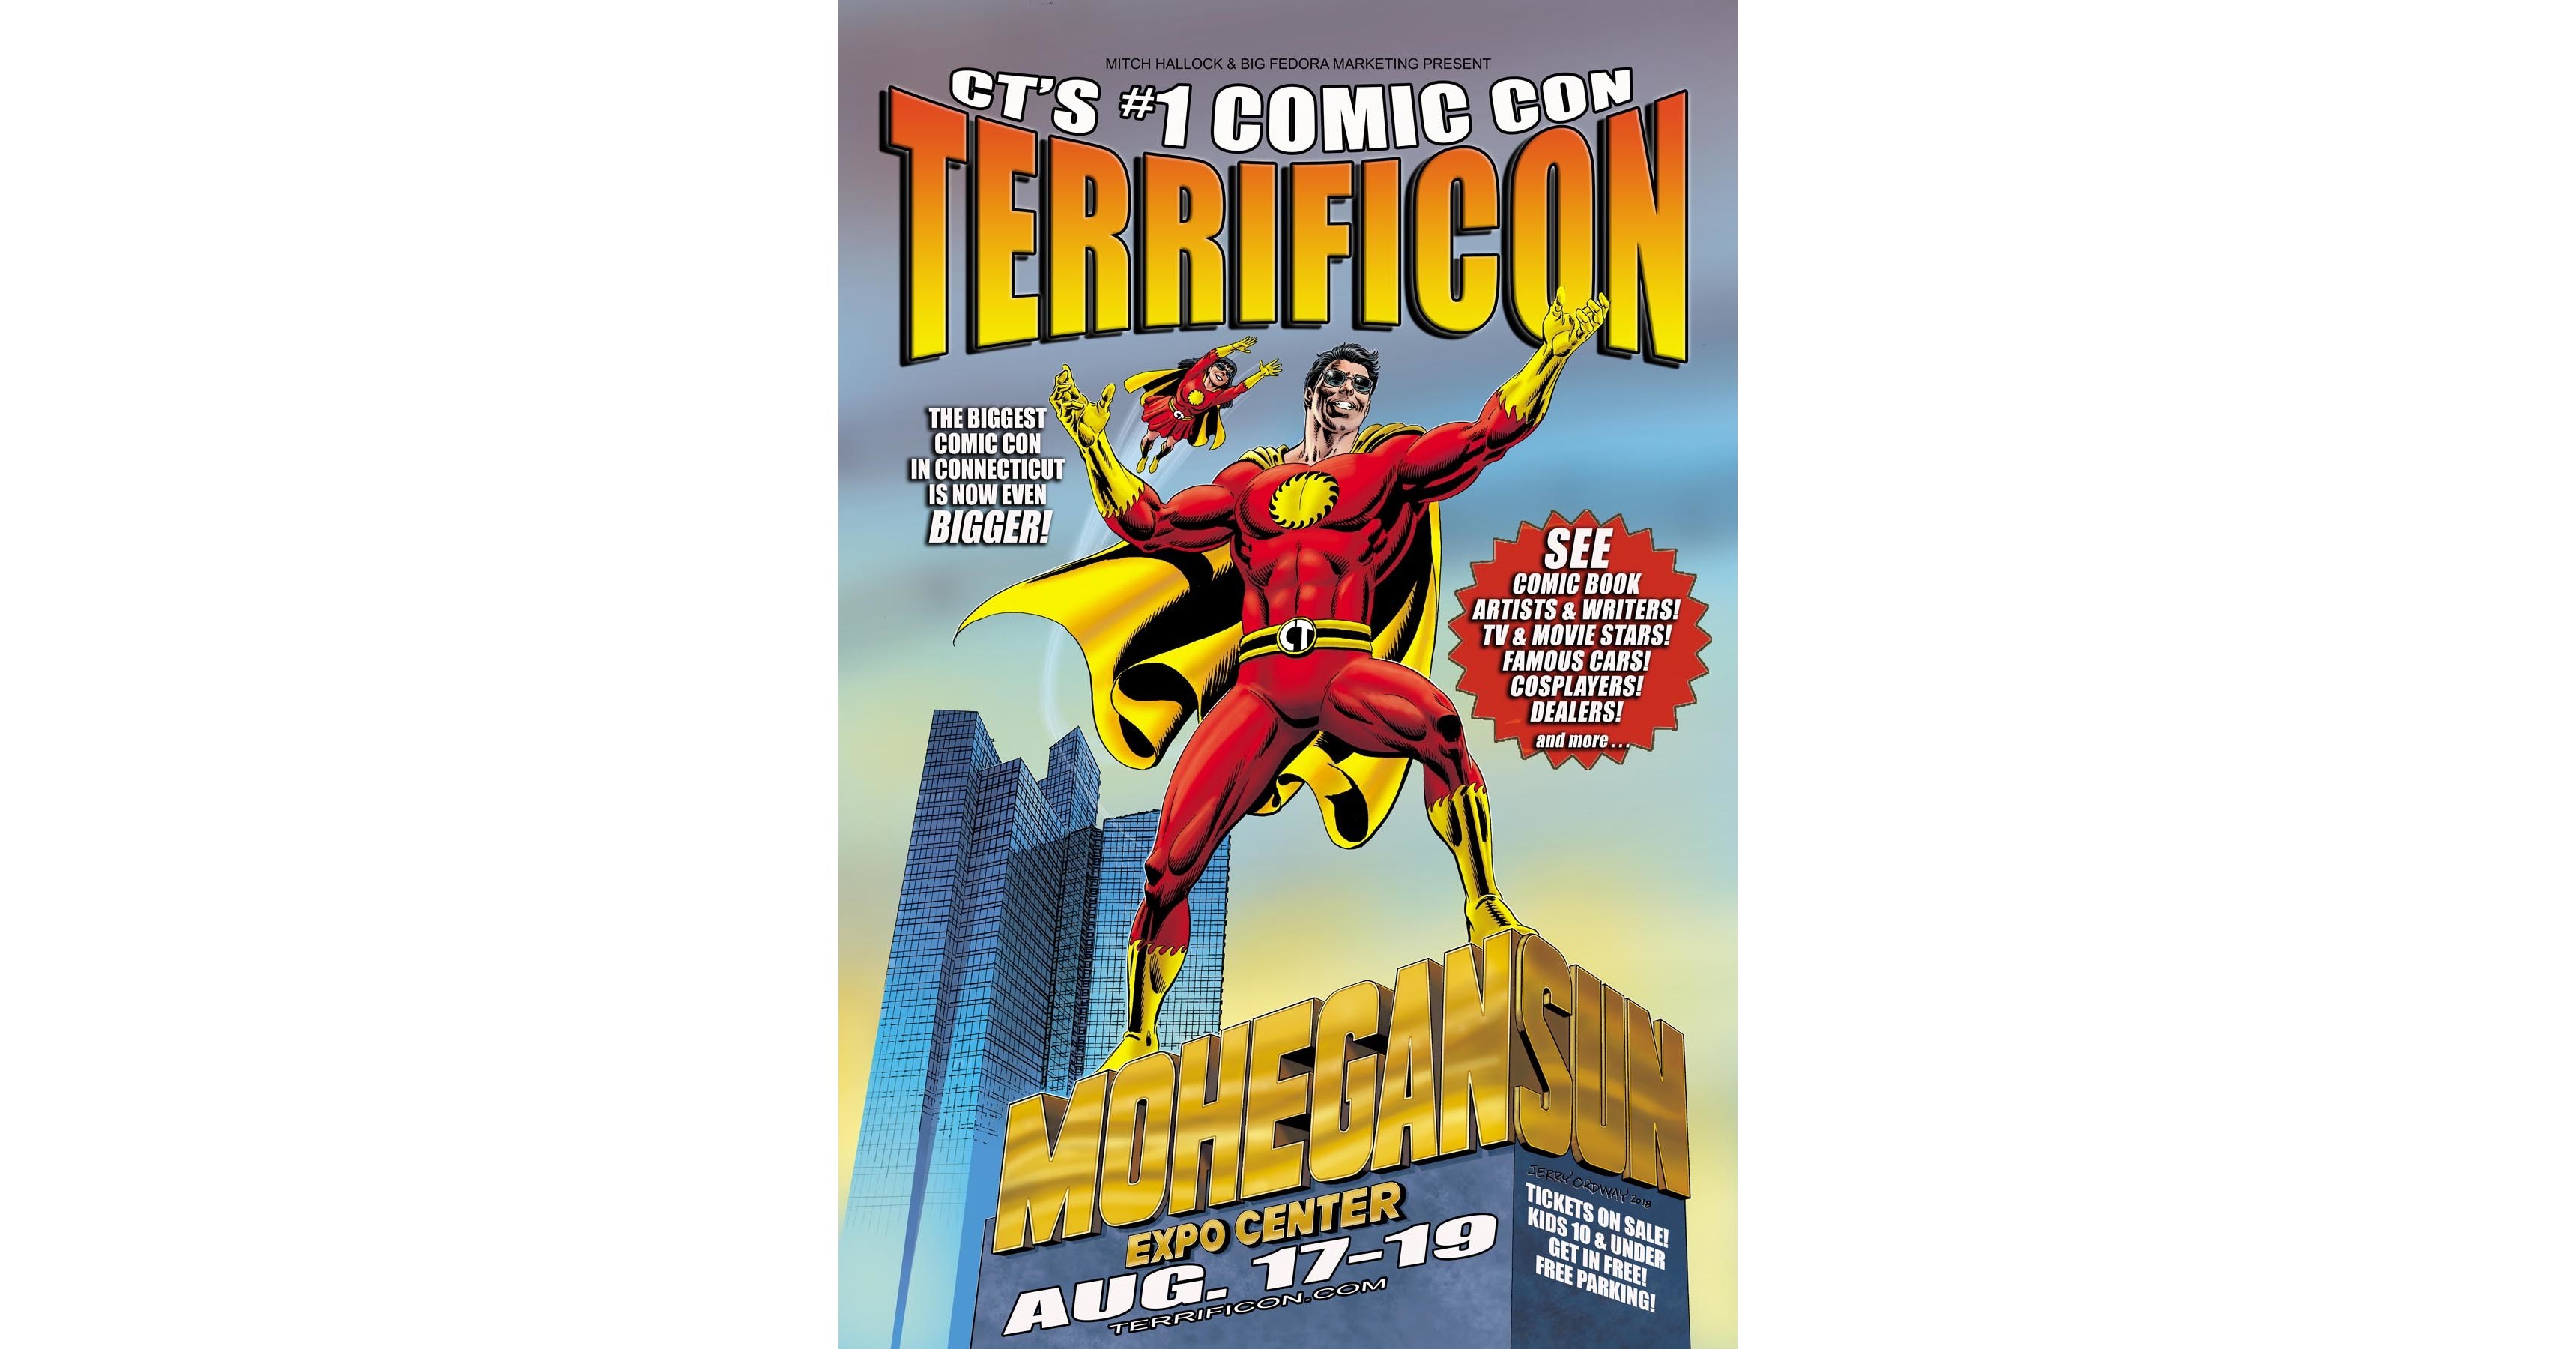 TERRIFICON Brings Comic Con Action to Mohegan Sun's AllNew, Giant